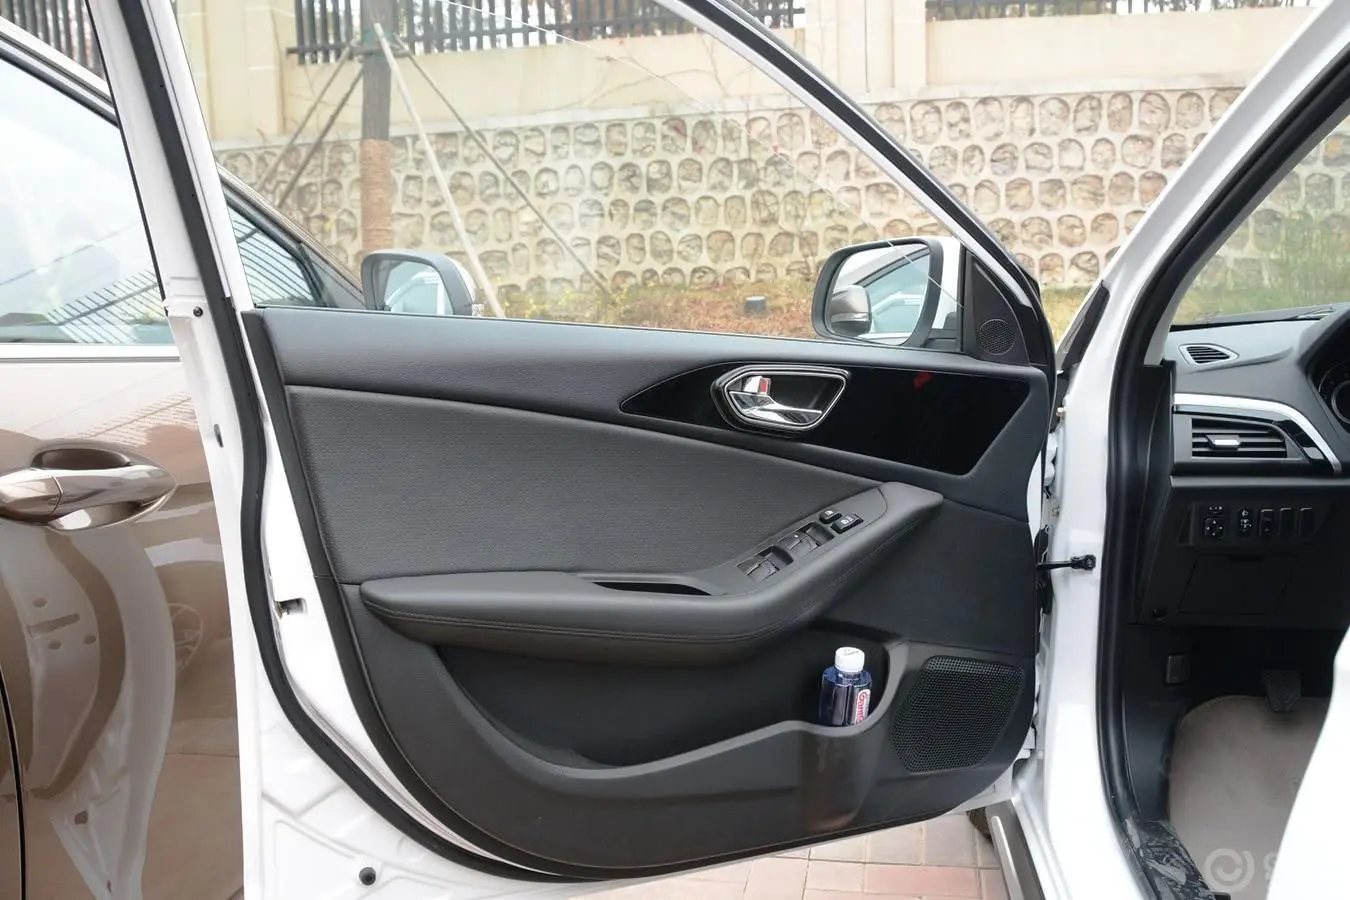 V6菱仕CROSS 1.5T 手动 智控版驾驶员侧车门内门板